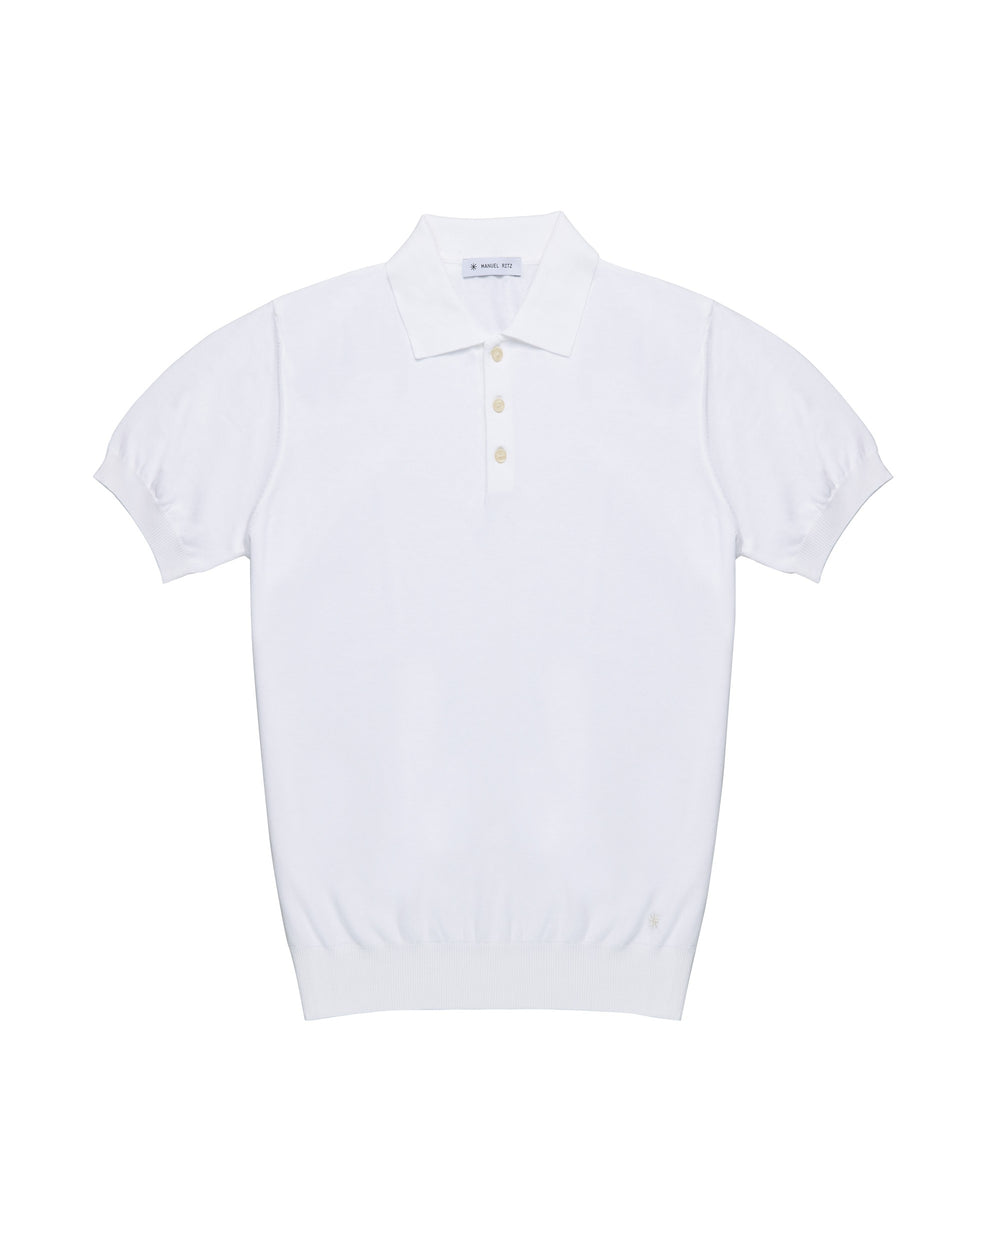 white cotton short-sleeved polo shirt